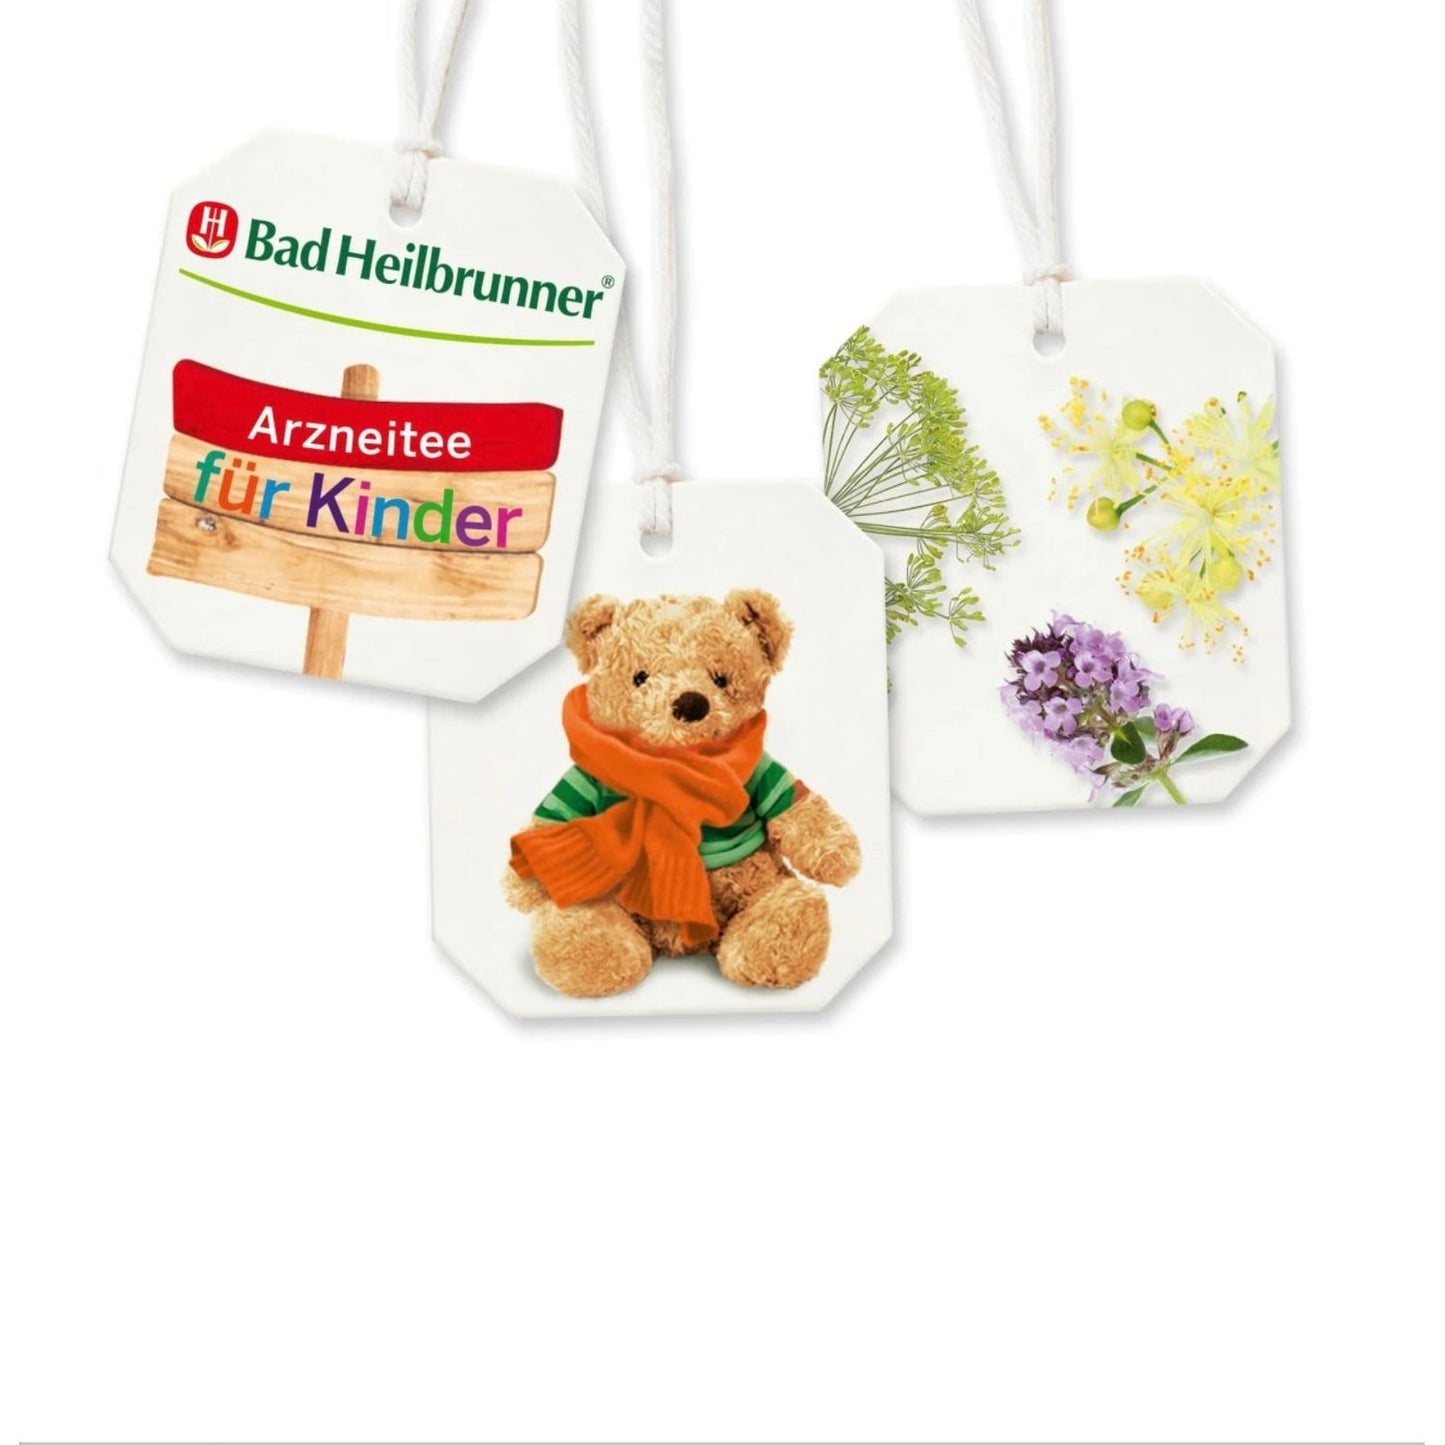 bio organic children herbal tea closeup tea bag tags, brand logo, teddy bear, flower